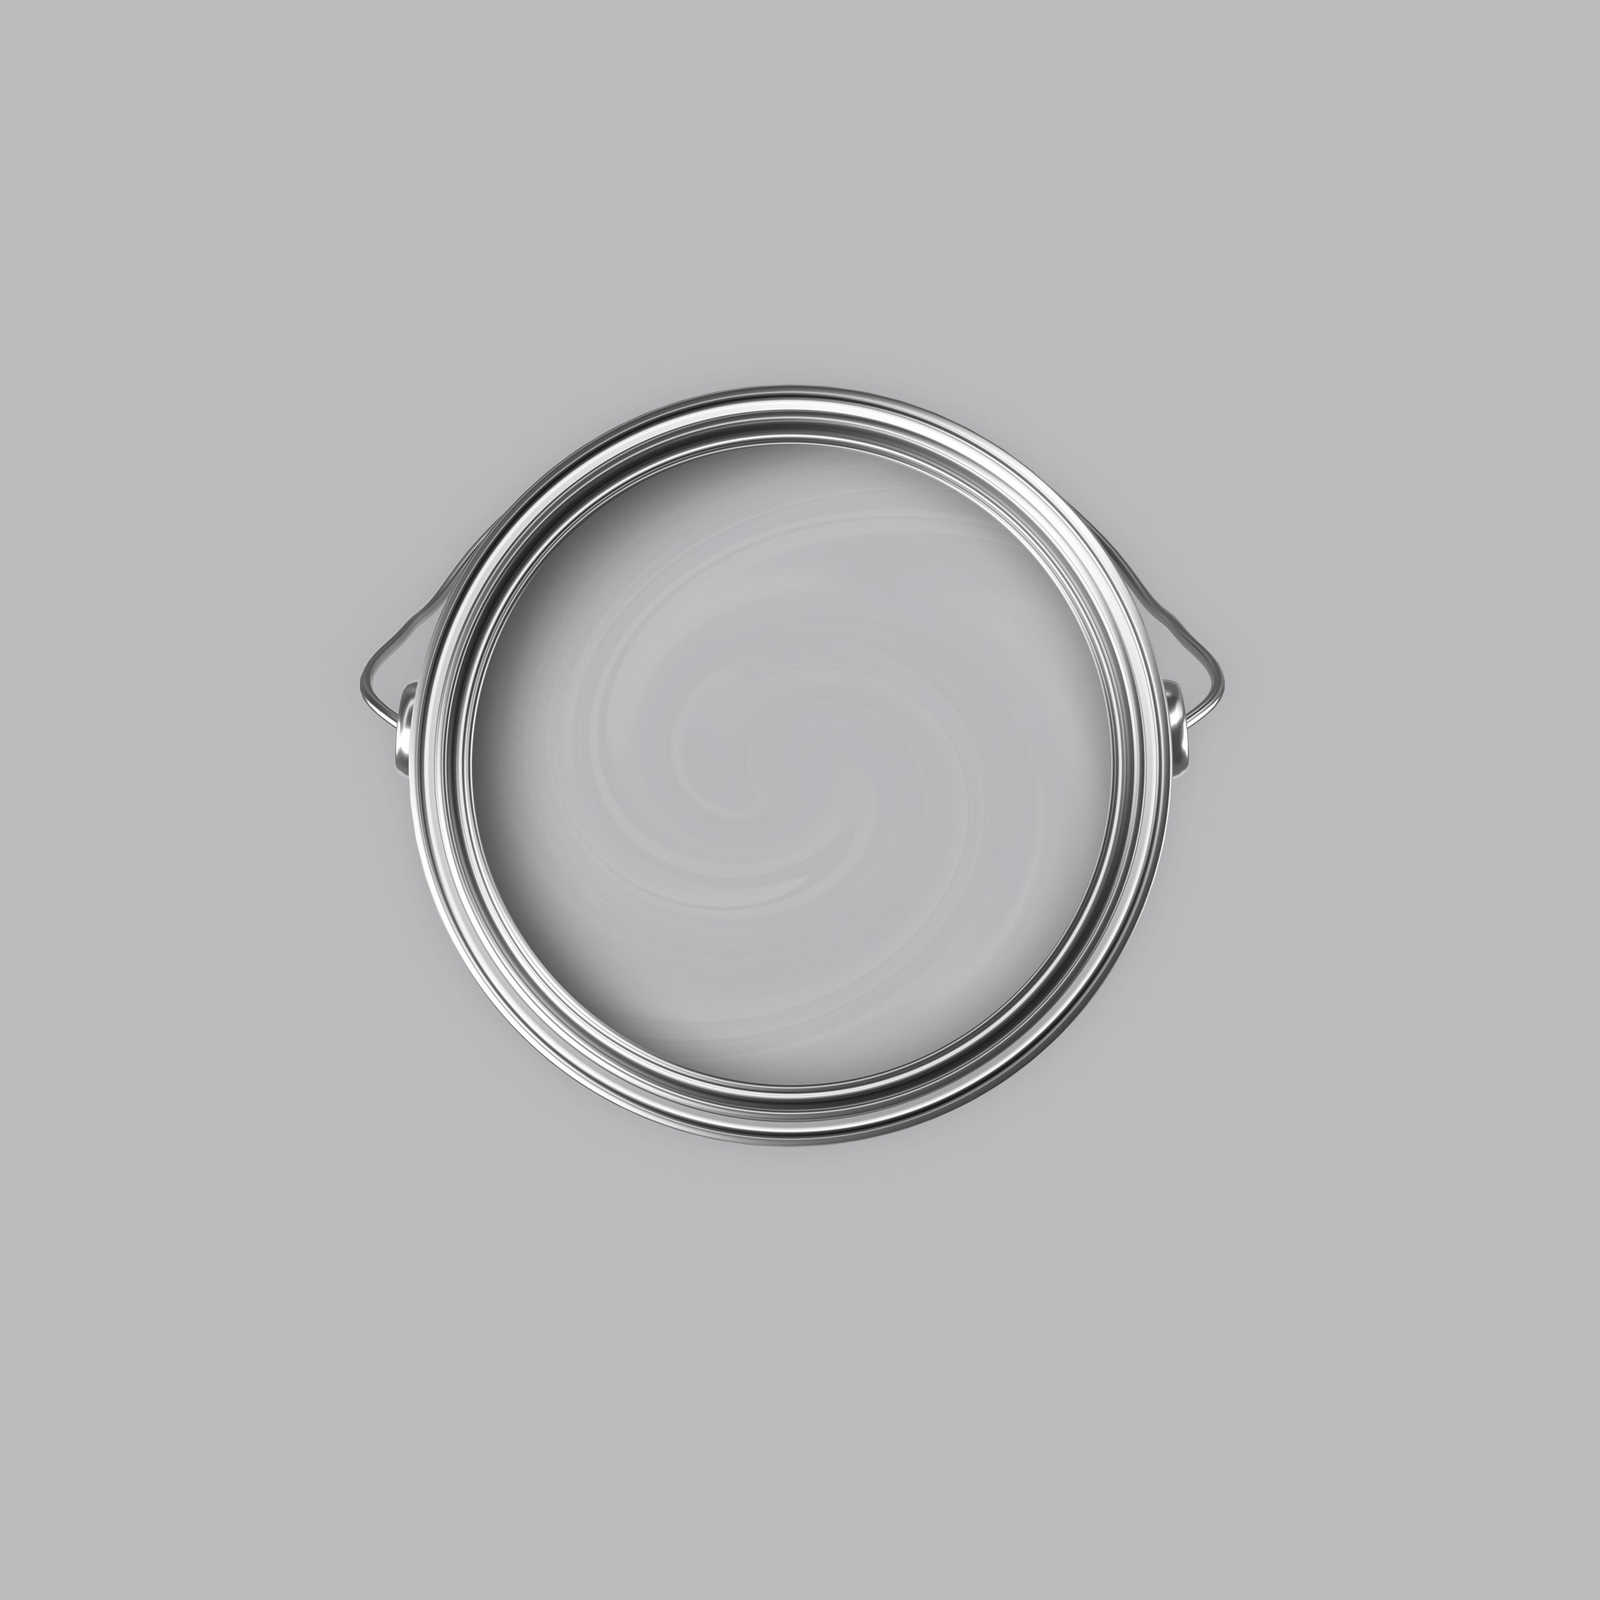             Premium Muurverf Balanced Silver »Industrial Grey« NW101 – 2,5 Liter
        